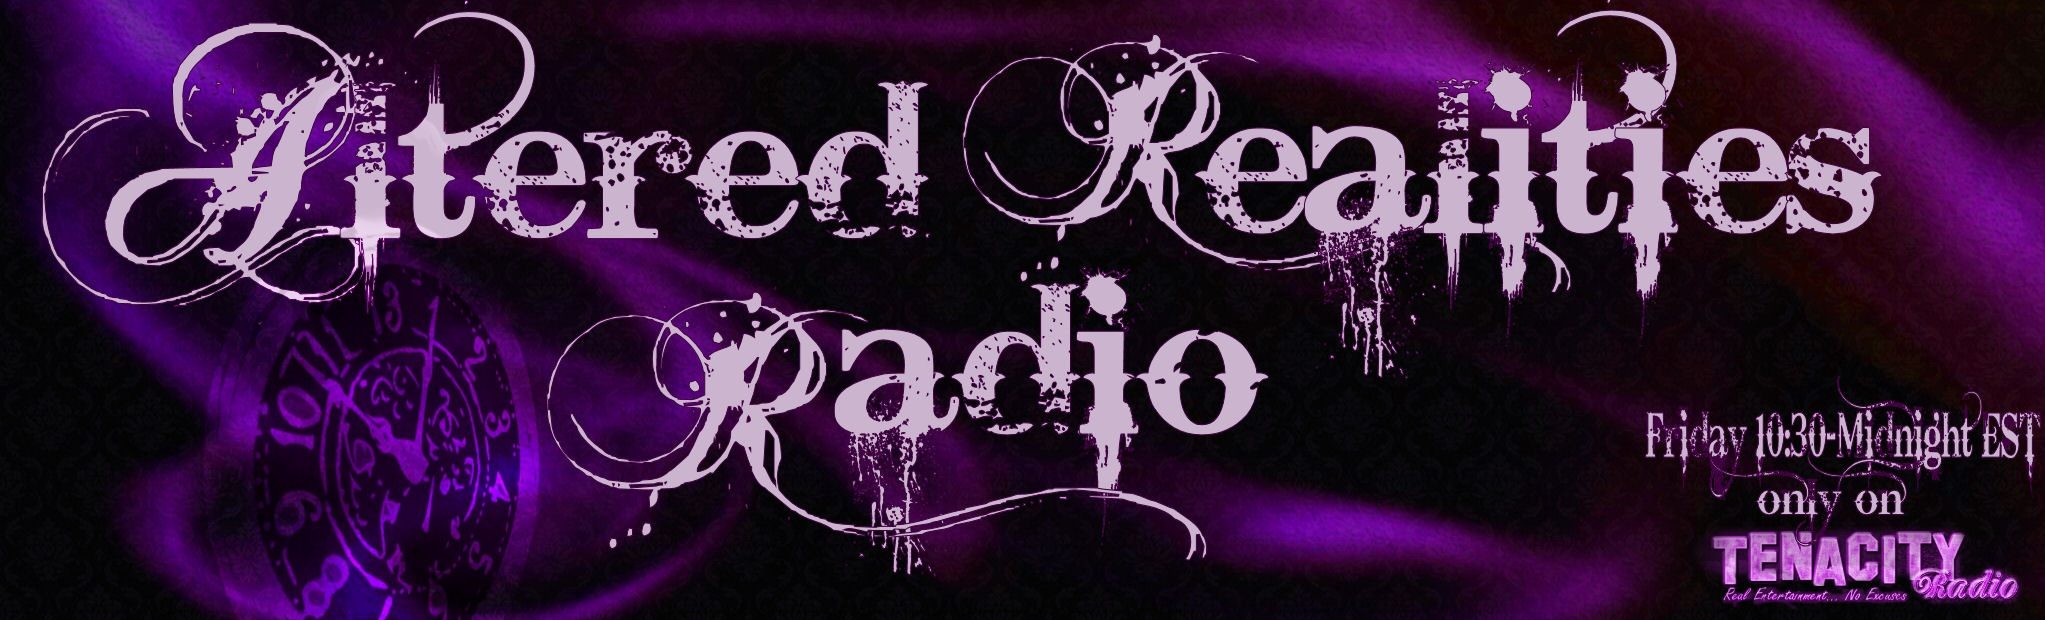 www.alteredrealitiesradio.com